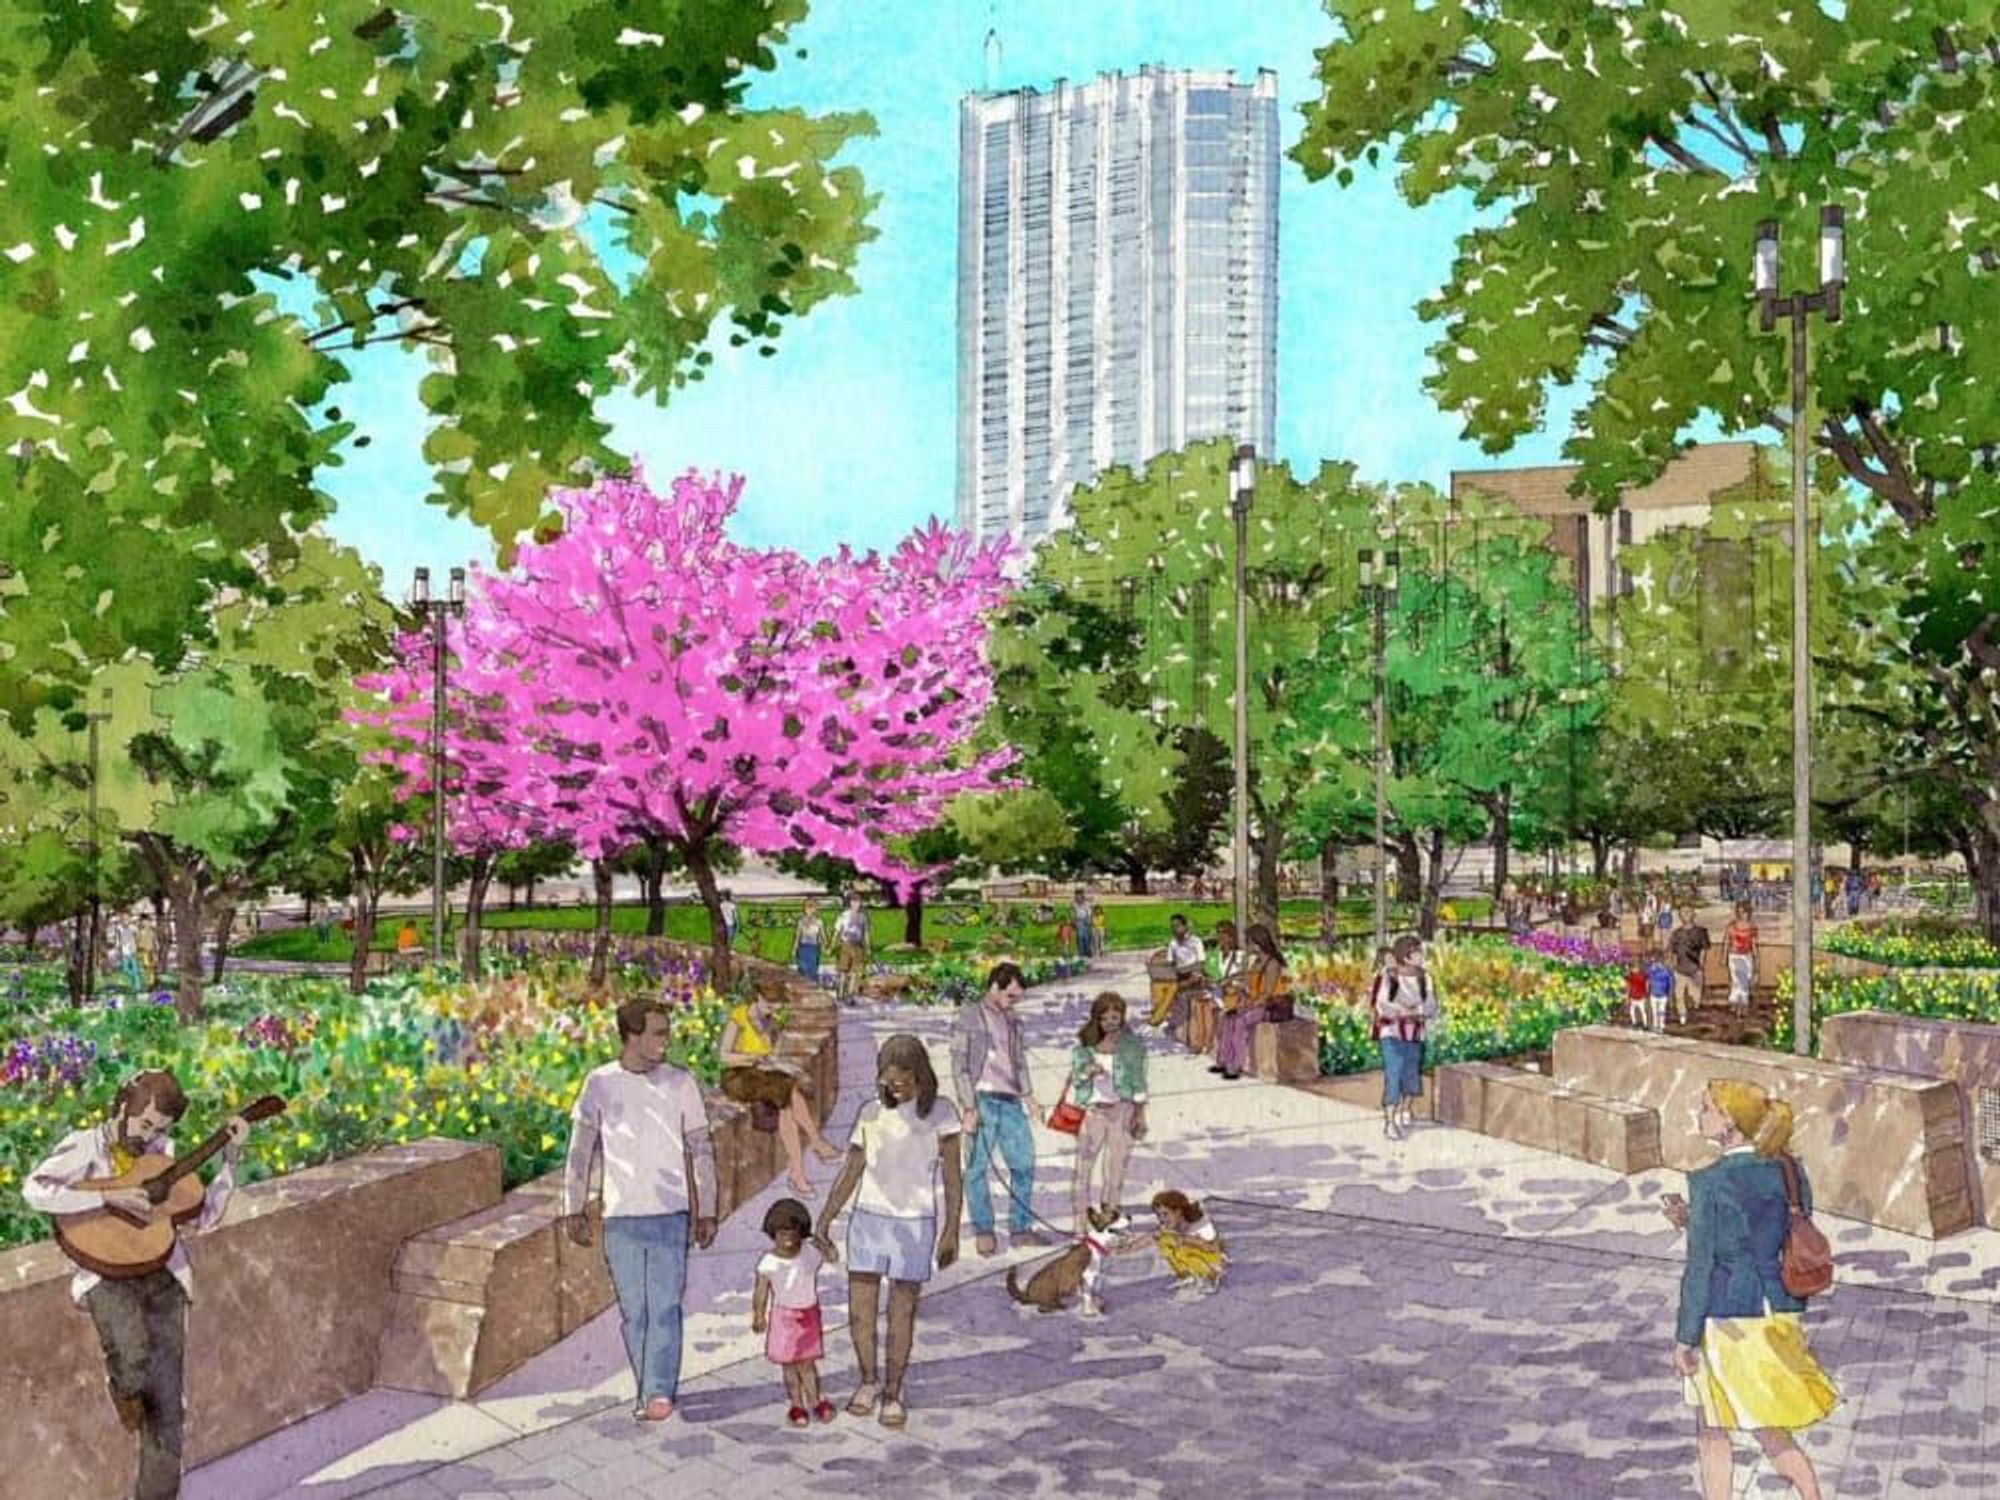 Republic Square Park downtown Austin renovation rendering 2016